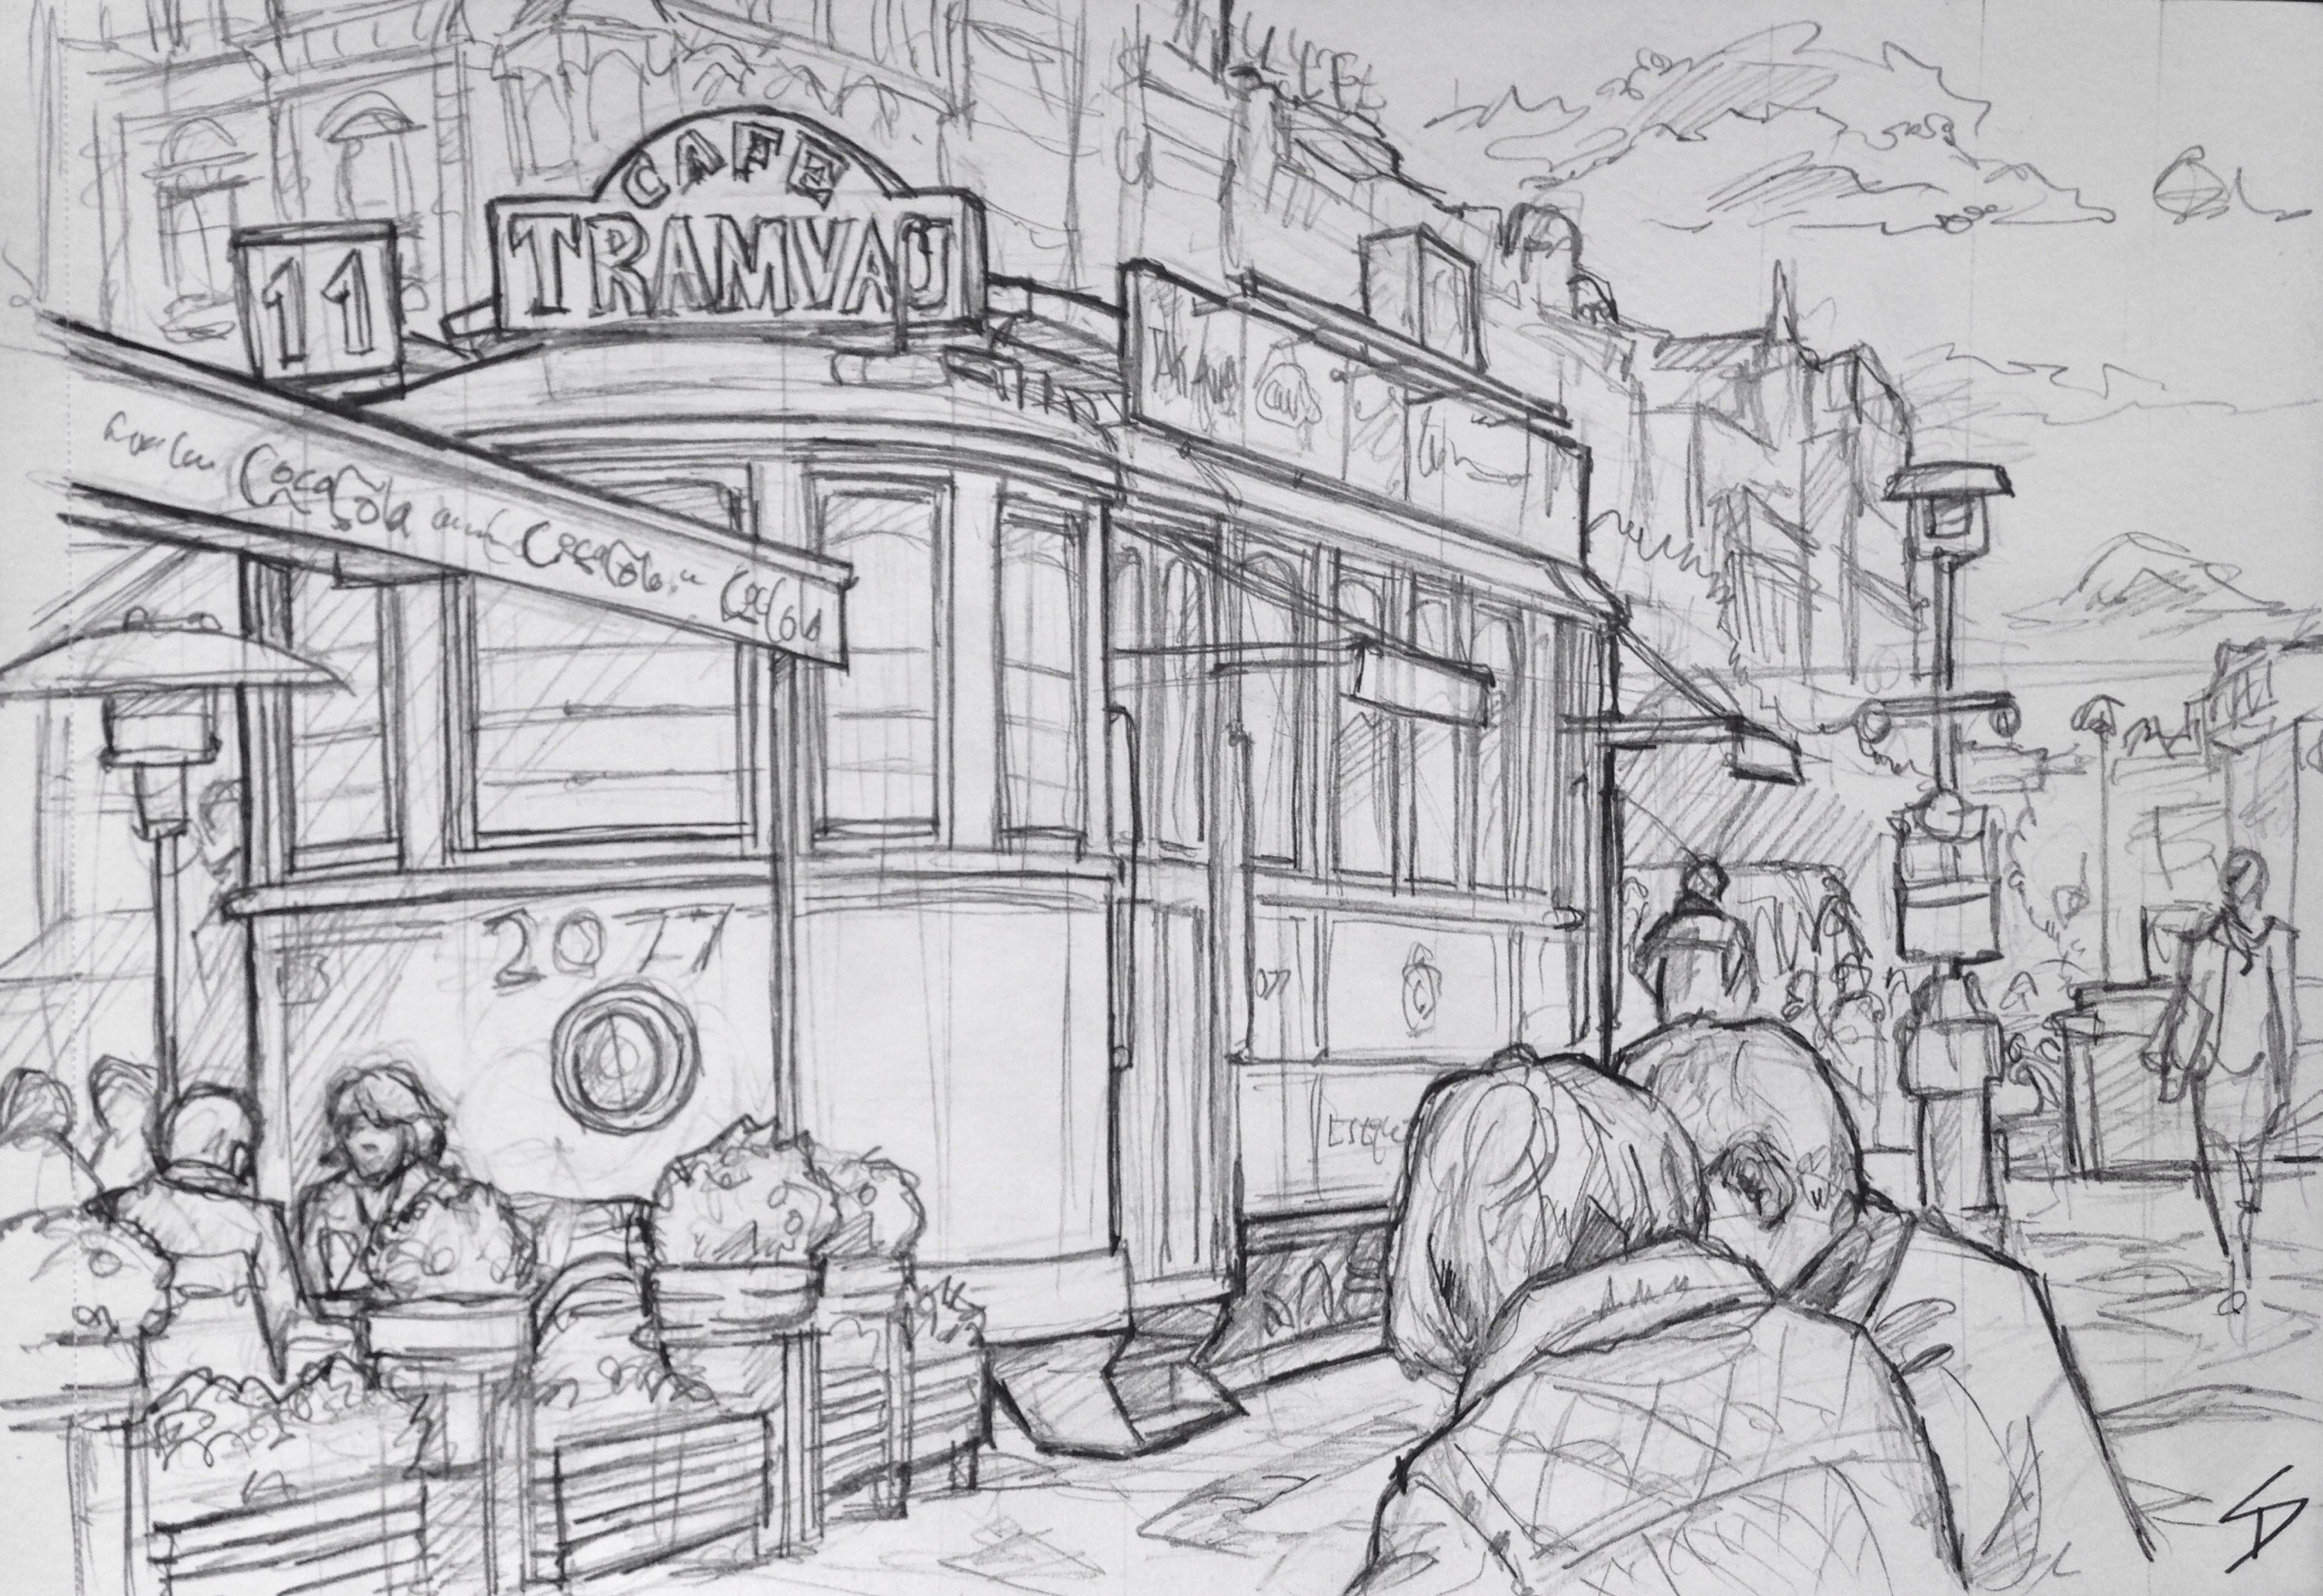 Quick Sketch. 'Wenceslas Square, Prague.' Old tram car used as a cafe. Also known as 'Vaclavska Namesti', Wenceslas Square is one of Prague's main squares. It is named after Saint Wenceslas - patron saint of Bohemia. Some buildings at the Museum end of the square were destroyed during the Prague Uprising of 1945. @davidasutton @sketchbookexplorer Facebook.com/davidanthonysutton #drawing #sketch #prague #travel #travelblog #wenceslassquareprague